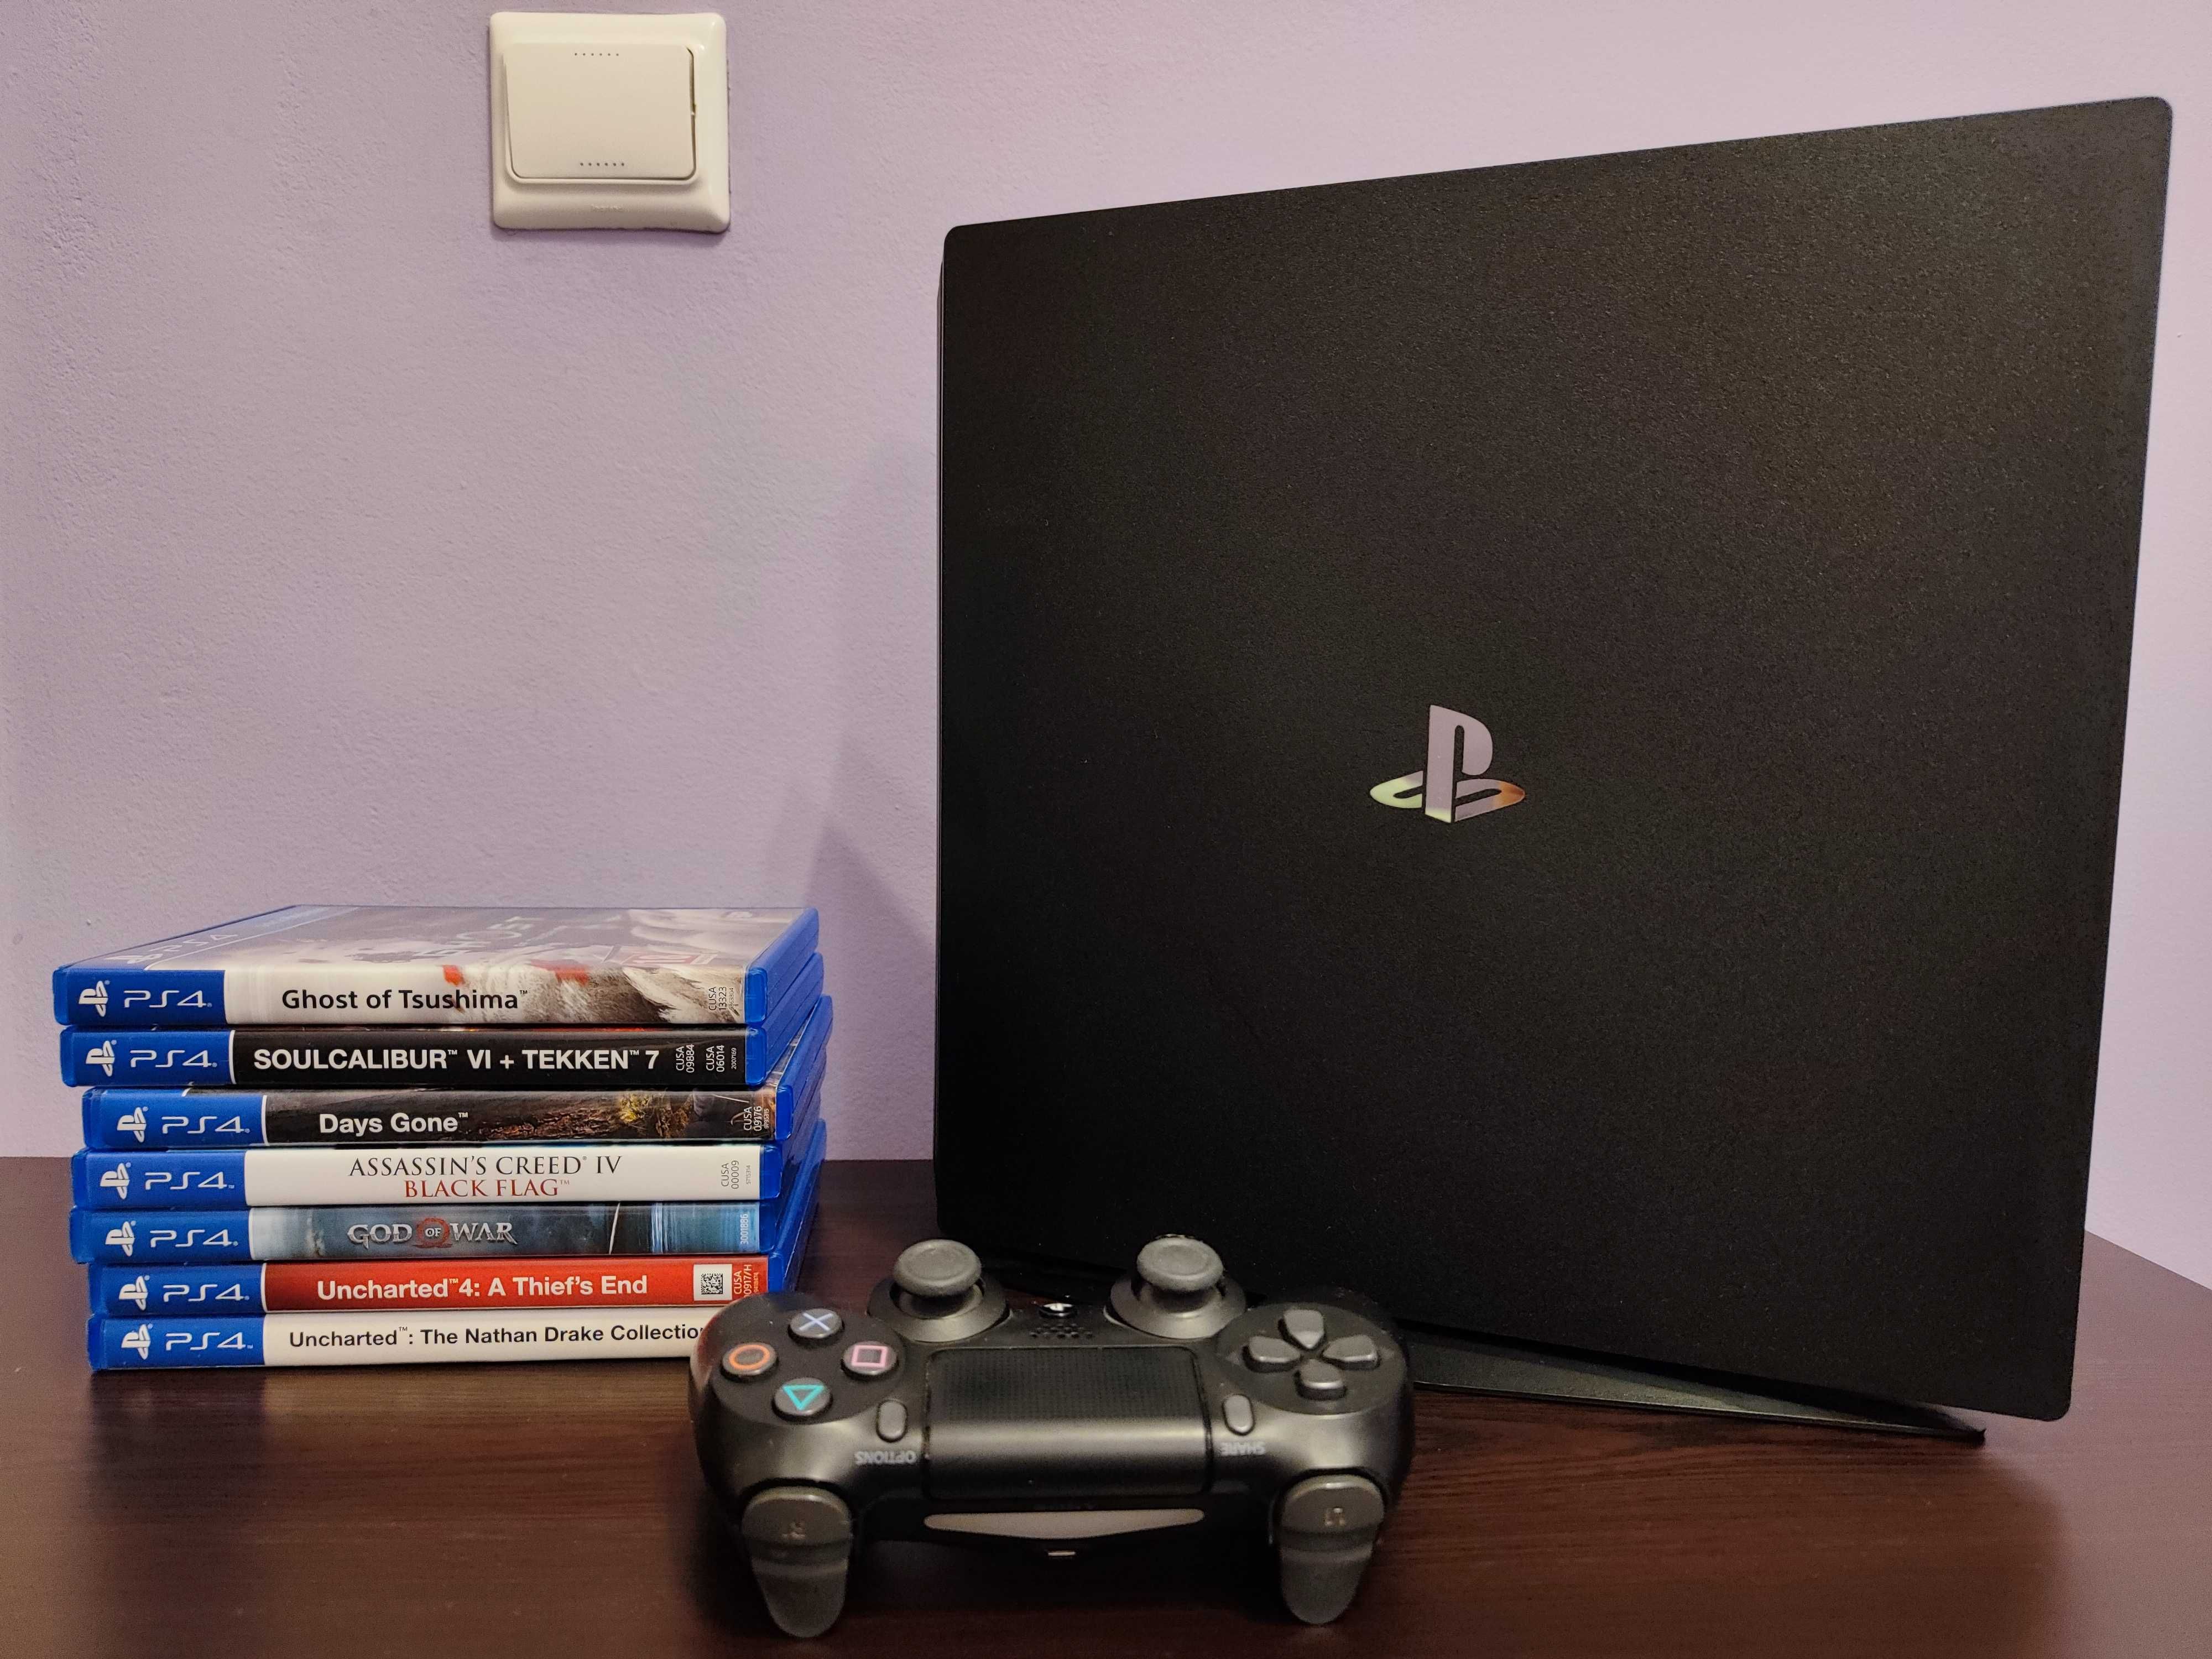 Sony PlayStation 4 Pro, PS4 Pro, Плейстейшън 4 Про - 1 TB HDD